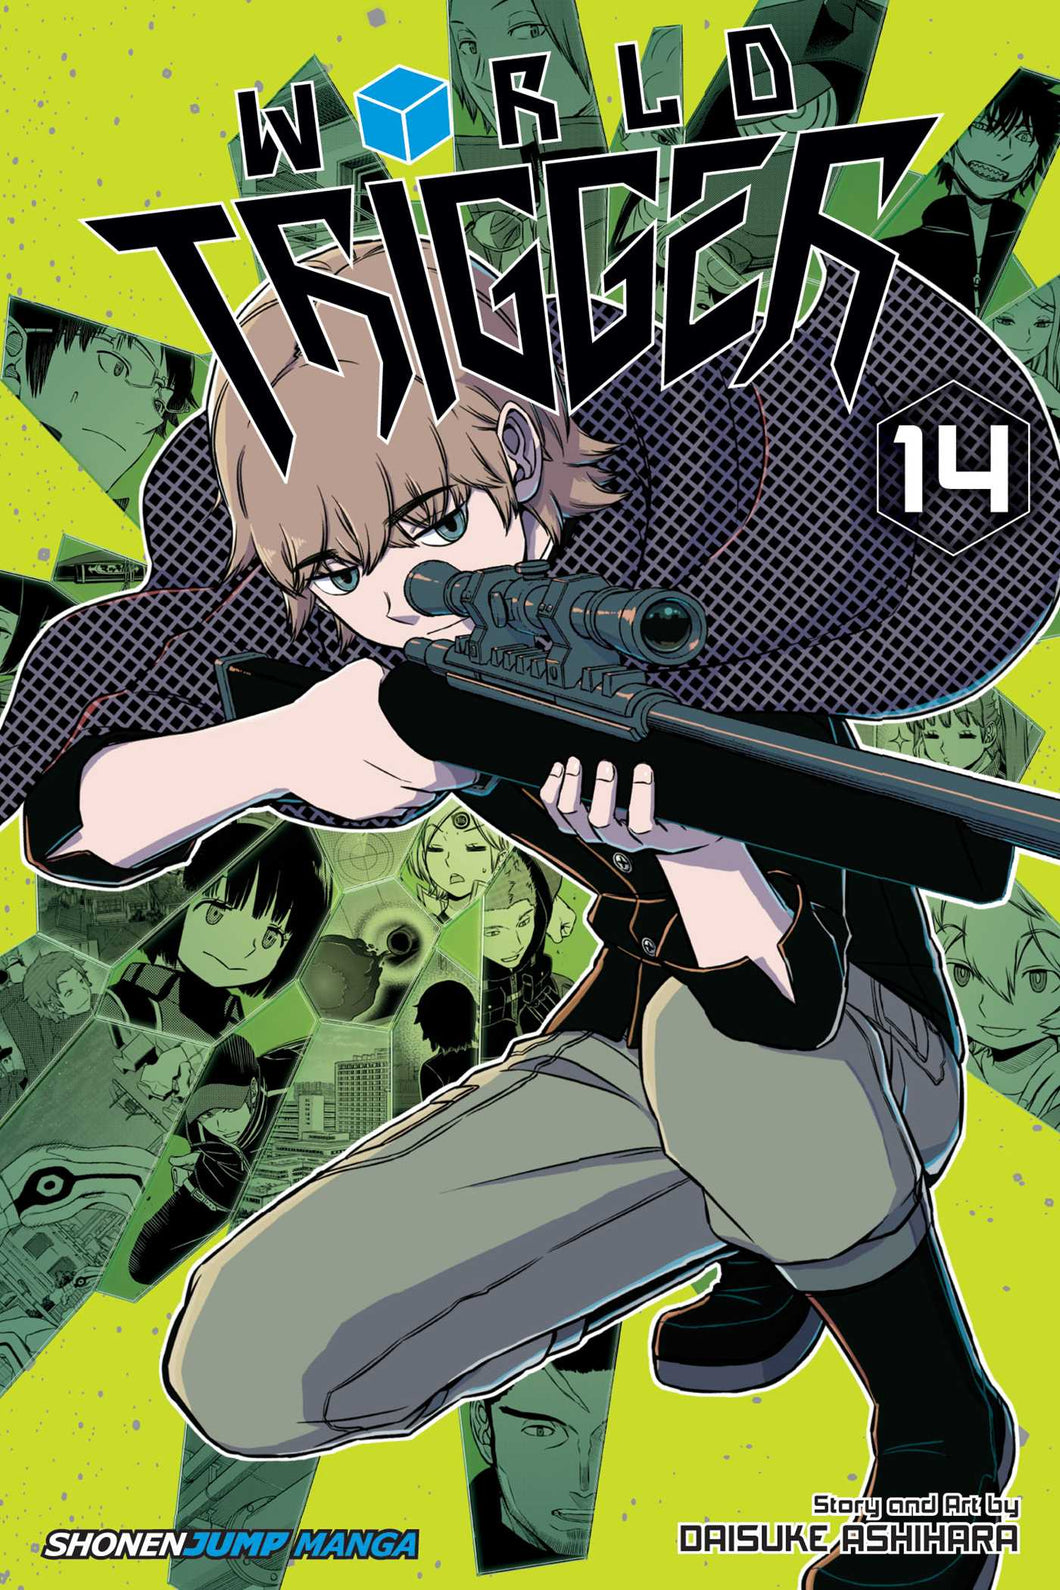 World Trigger Graphic Novel Vol 14